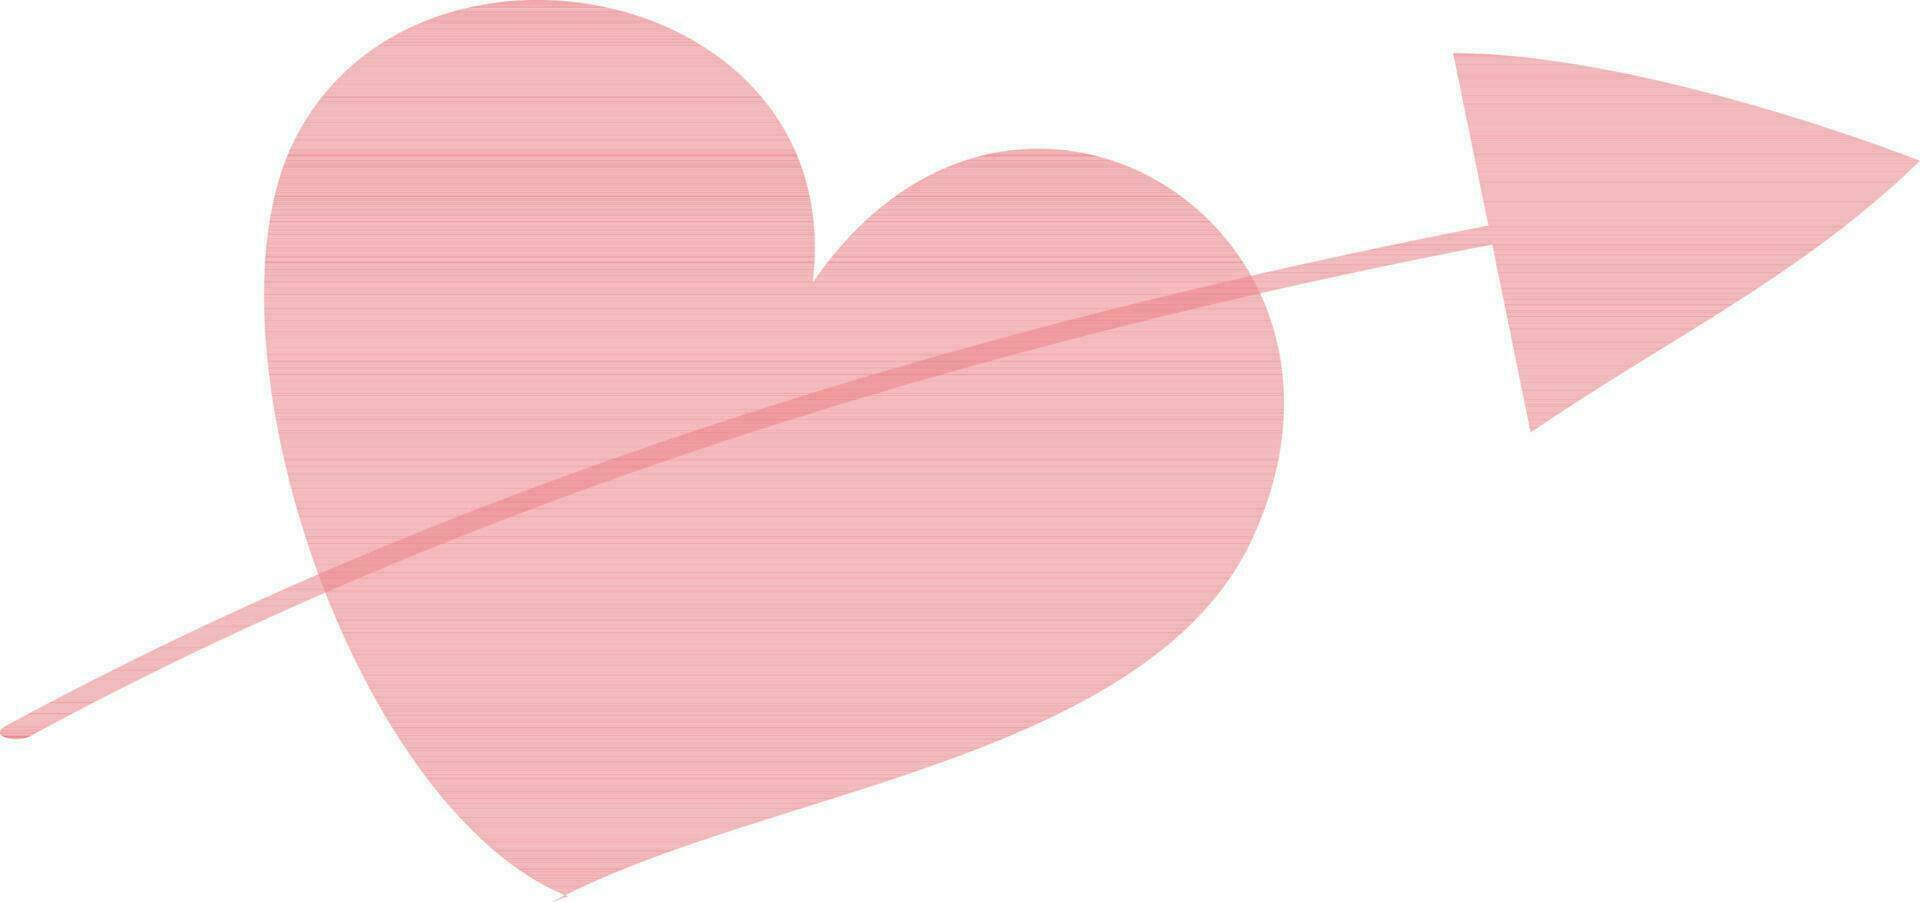 Peach color heart icon. vector